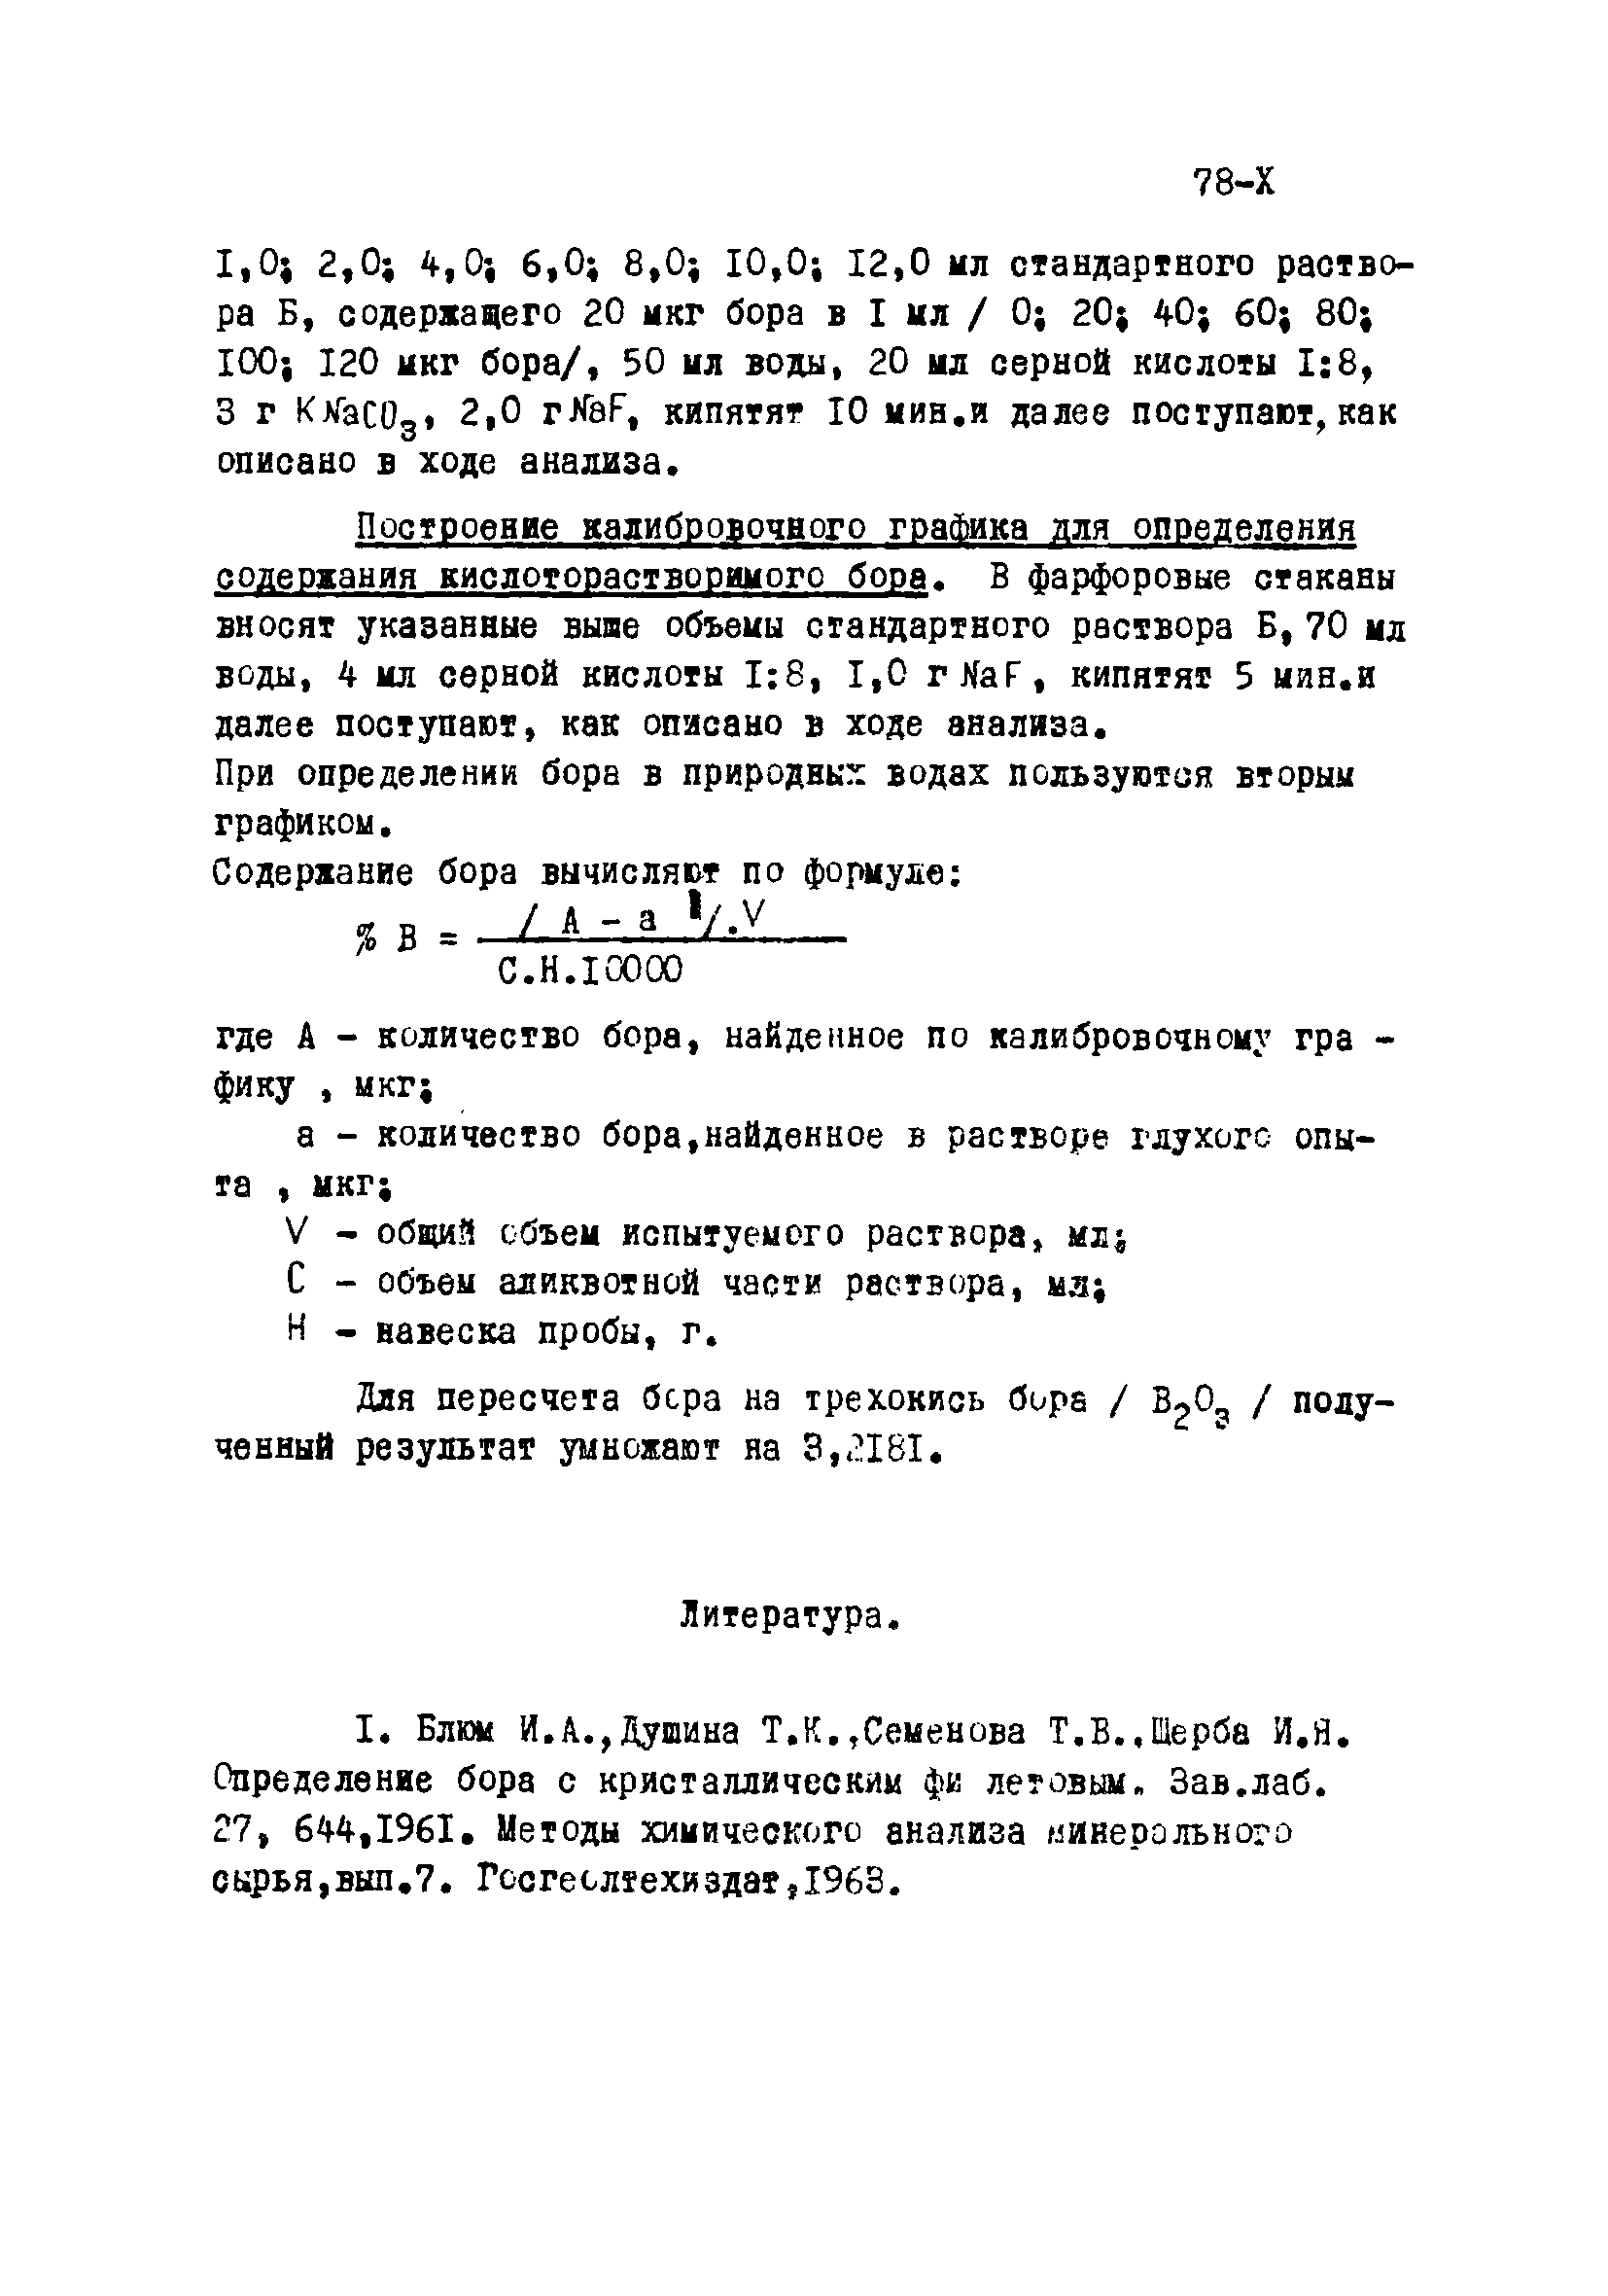 Инструкция НСАМ 78-Х